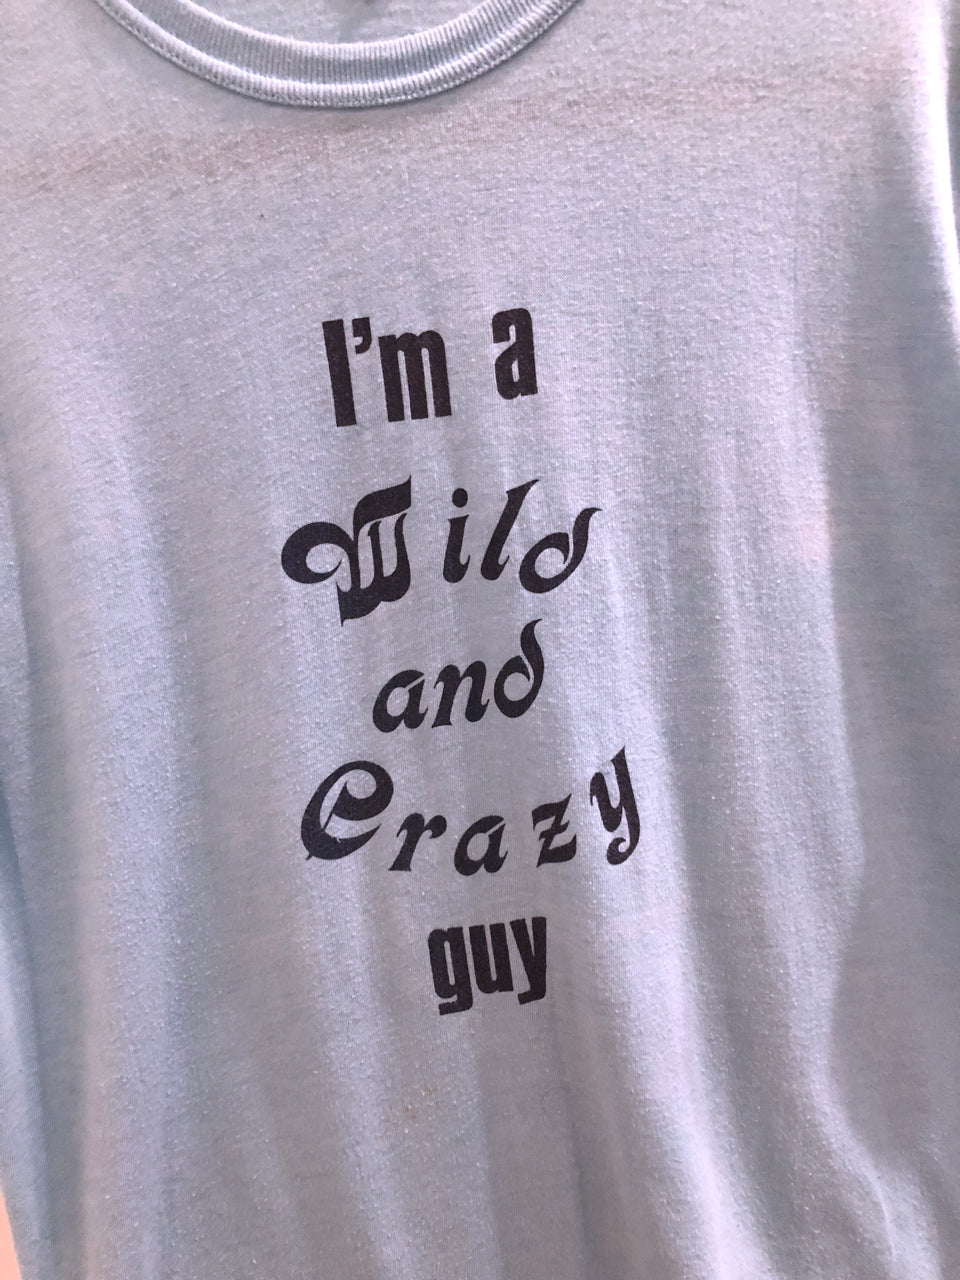 Wild and Crazy Guy (Steve Martin) T-Shirt